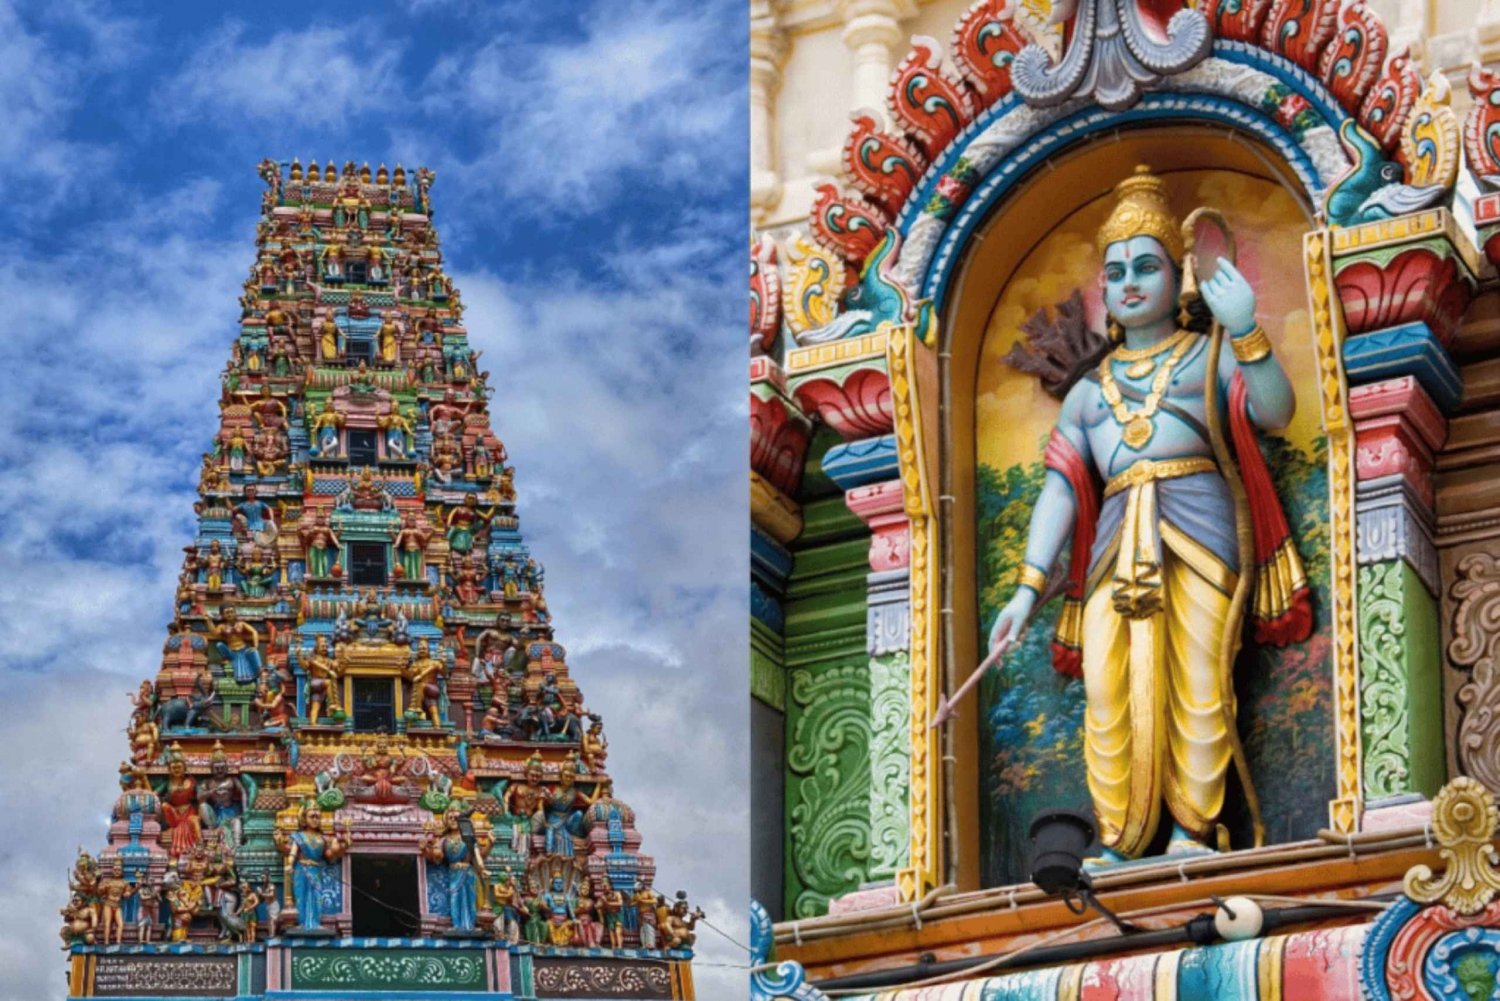 Singapore: Little India, Tekka Centre & Temple Gided Tour